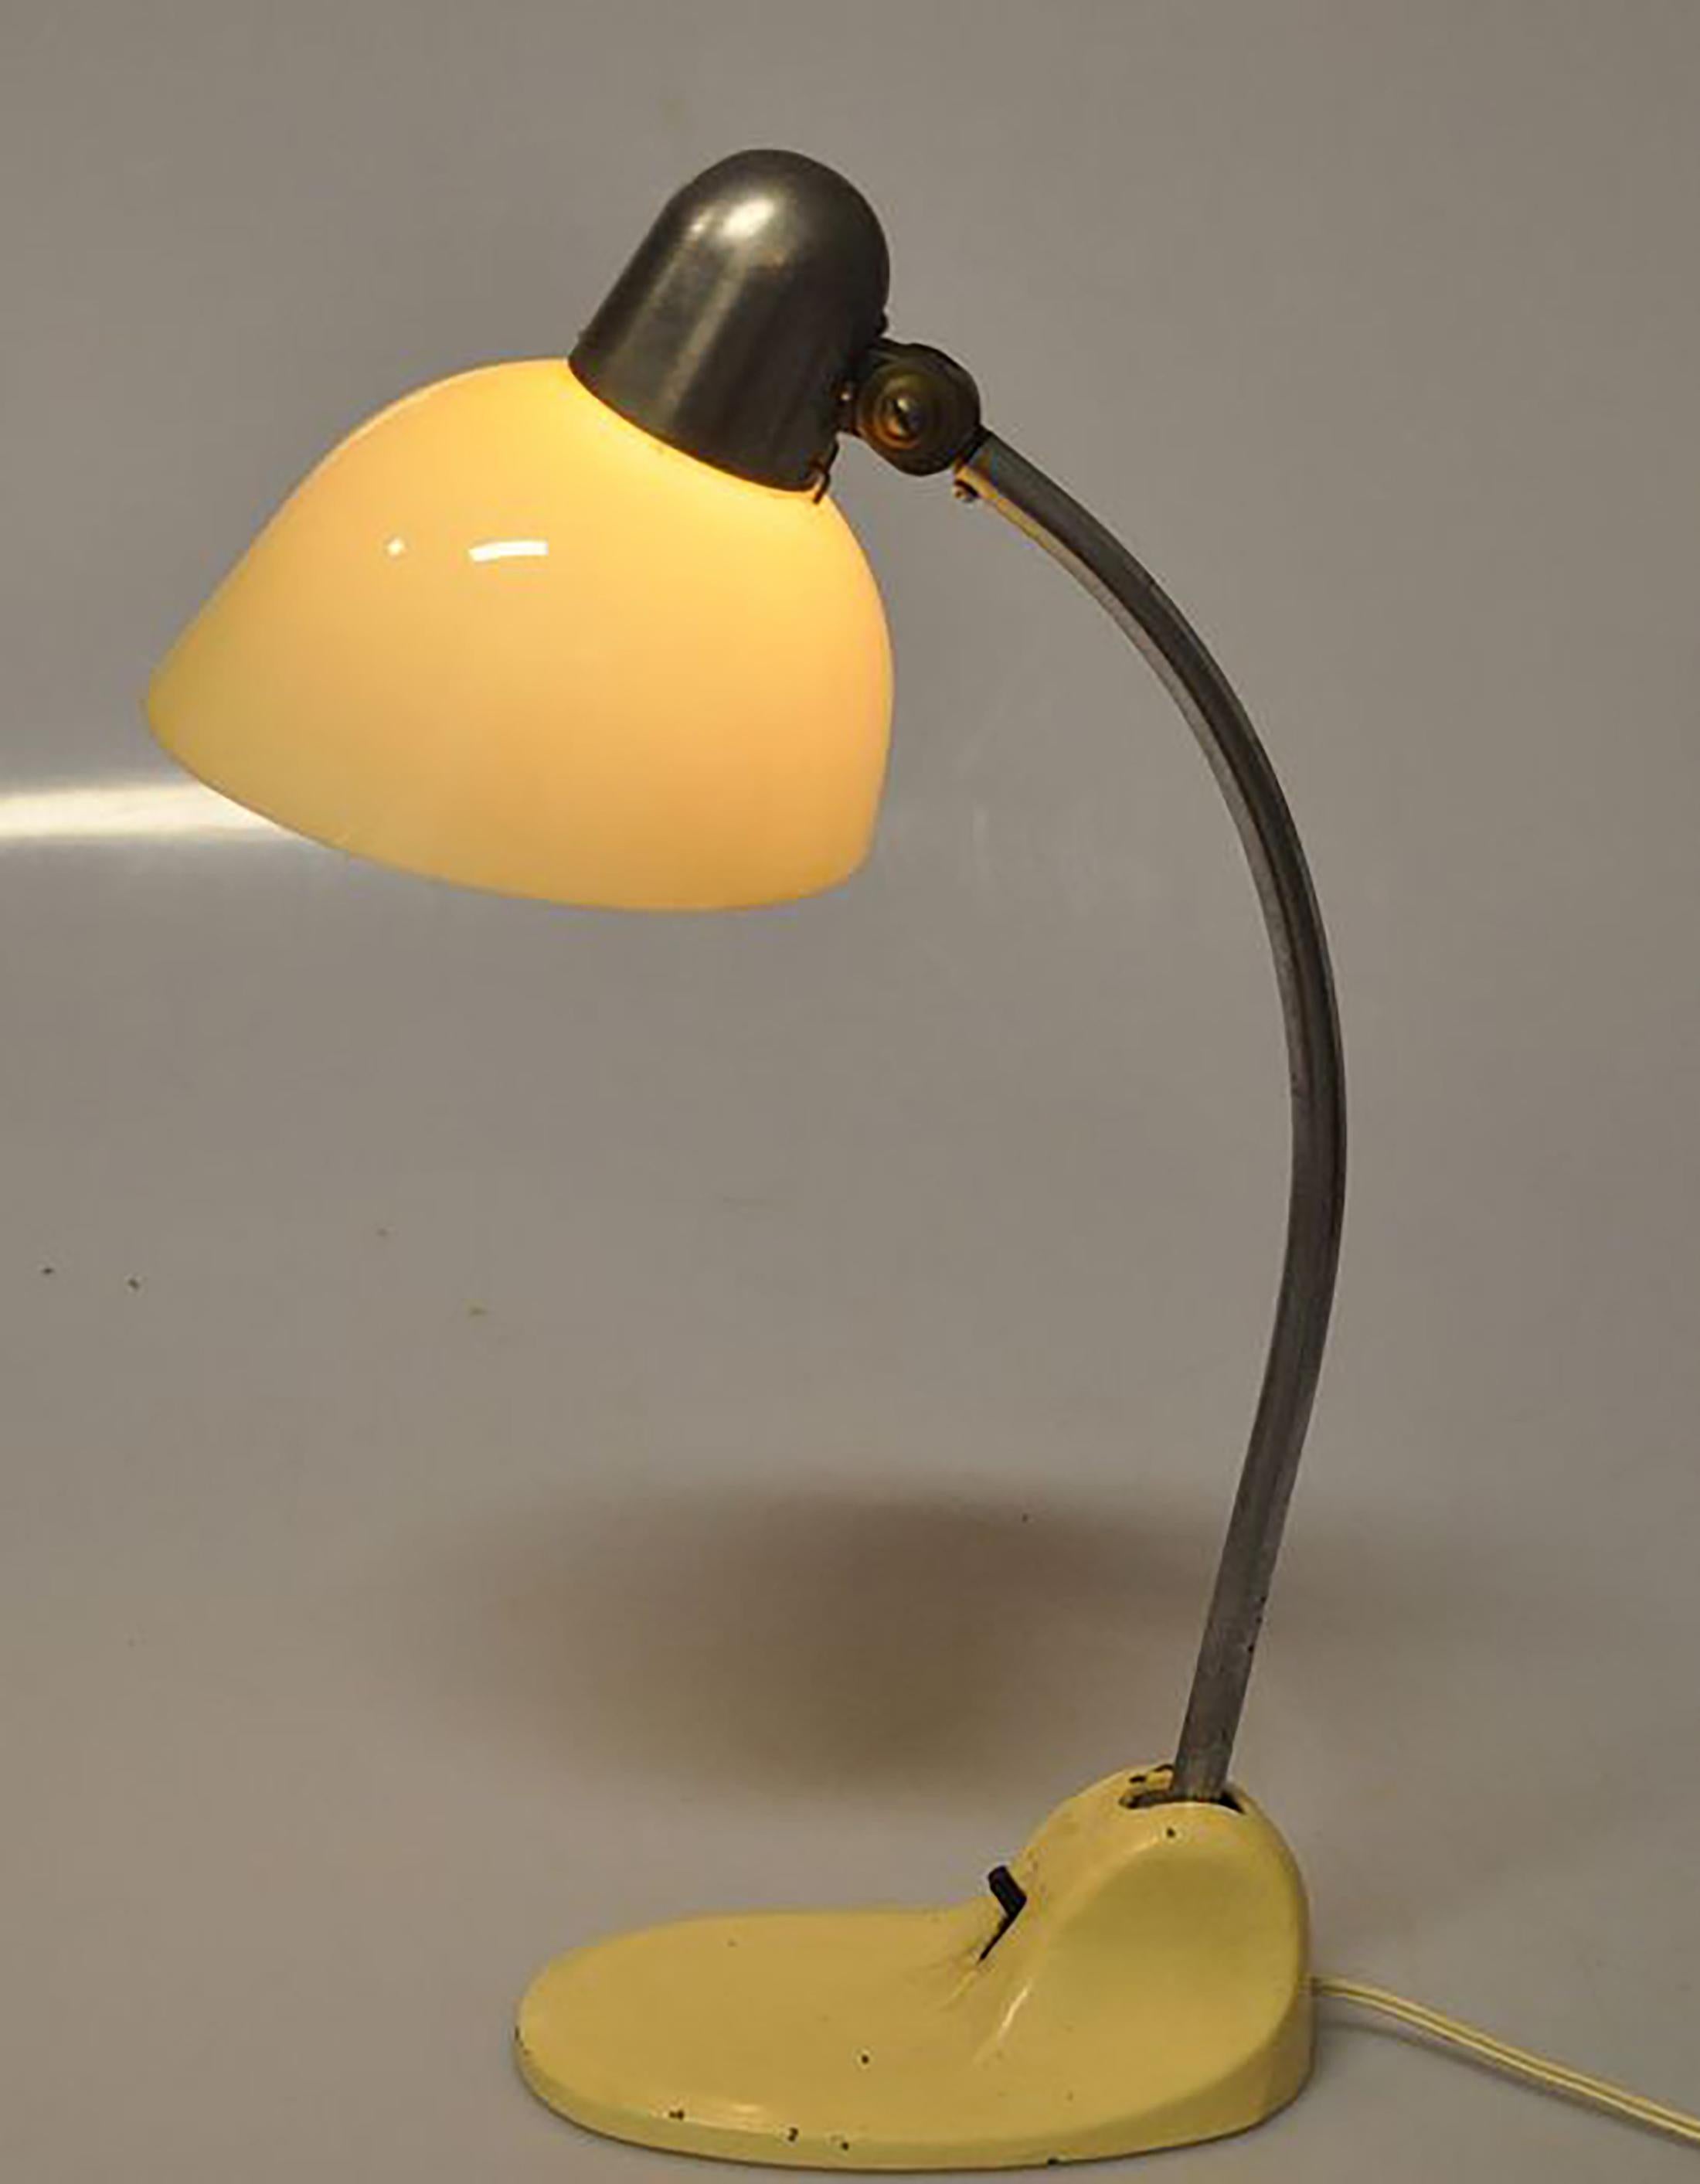 Bauhaus Desk Lamp by Siemens and Schuckert In Good Condition For Sale In Vienna, AT